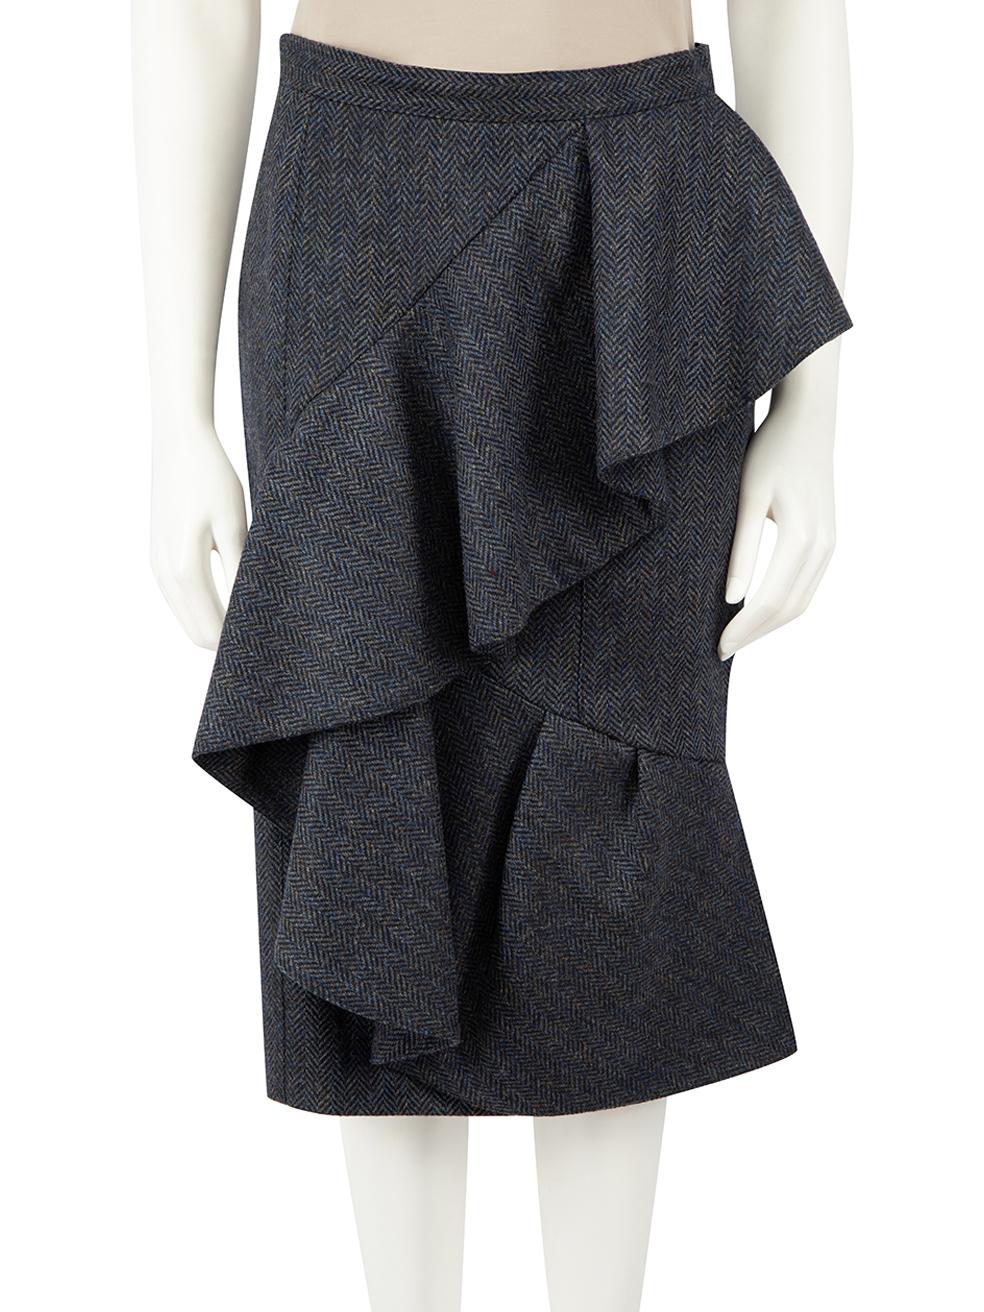 Burberry Burberry Prorsum Navy Wool Herringbone Ruffle Skirt Size M For Sale